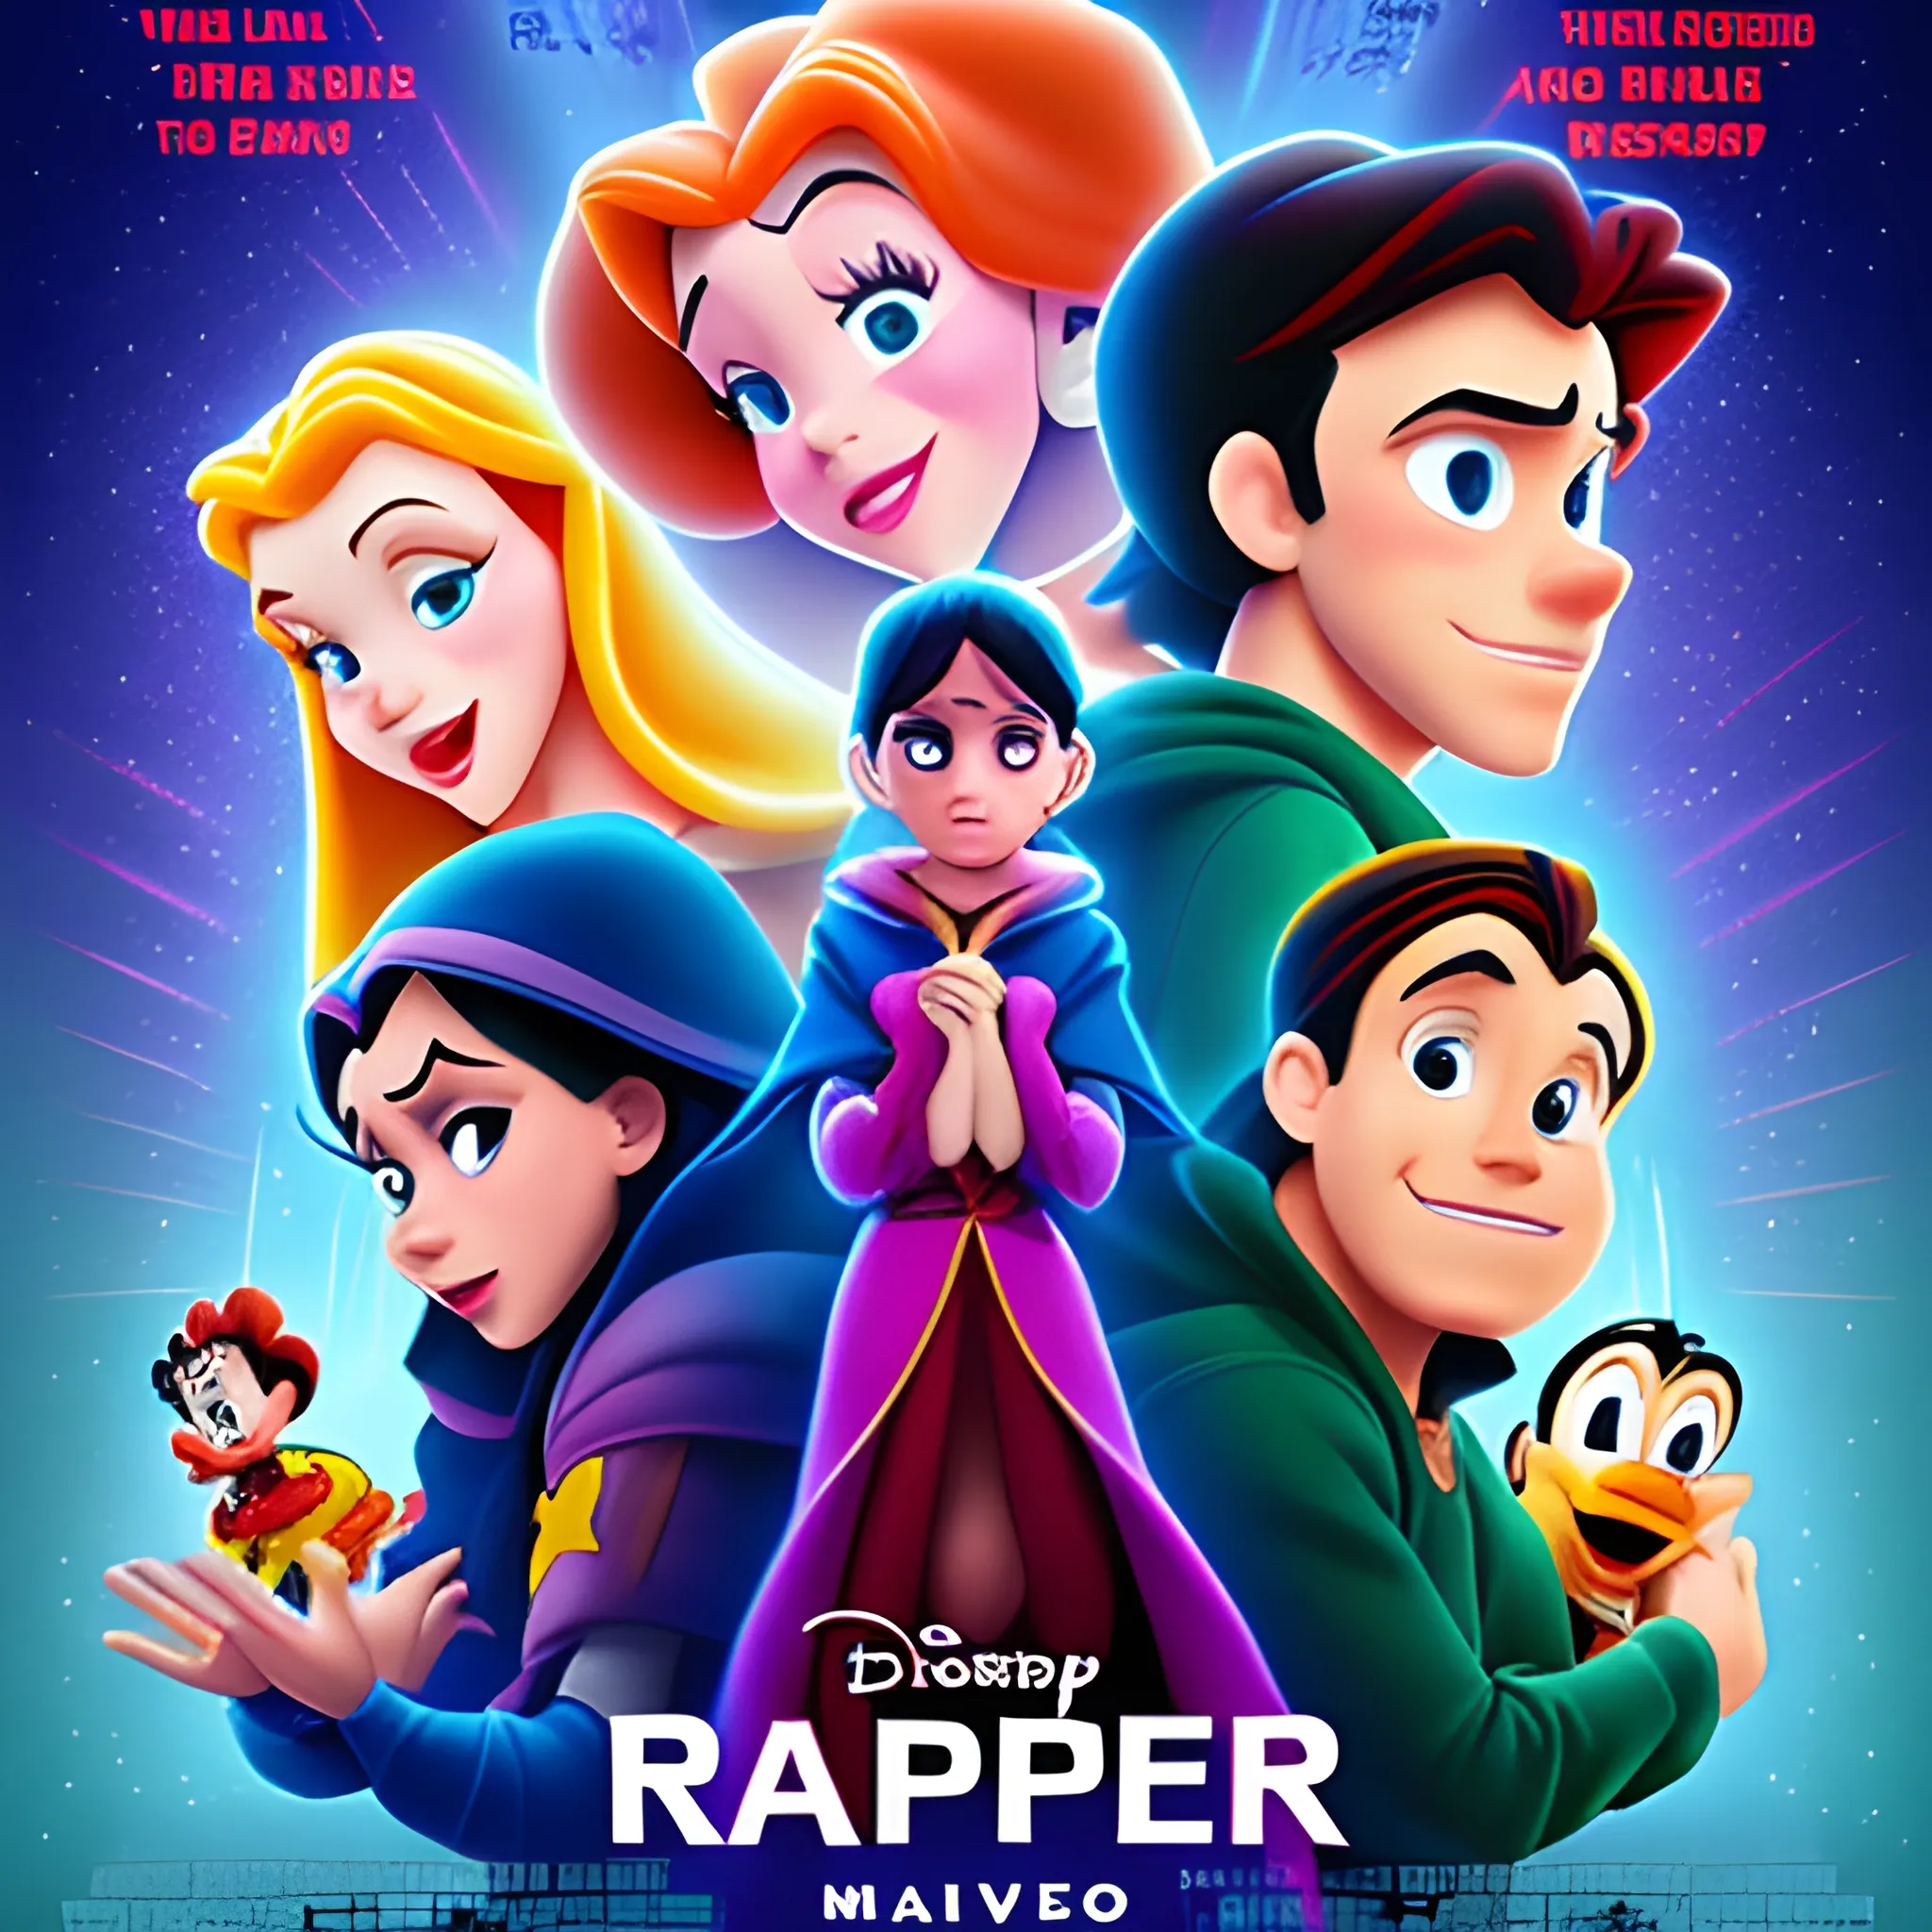 Raper Disney movie poster 